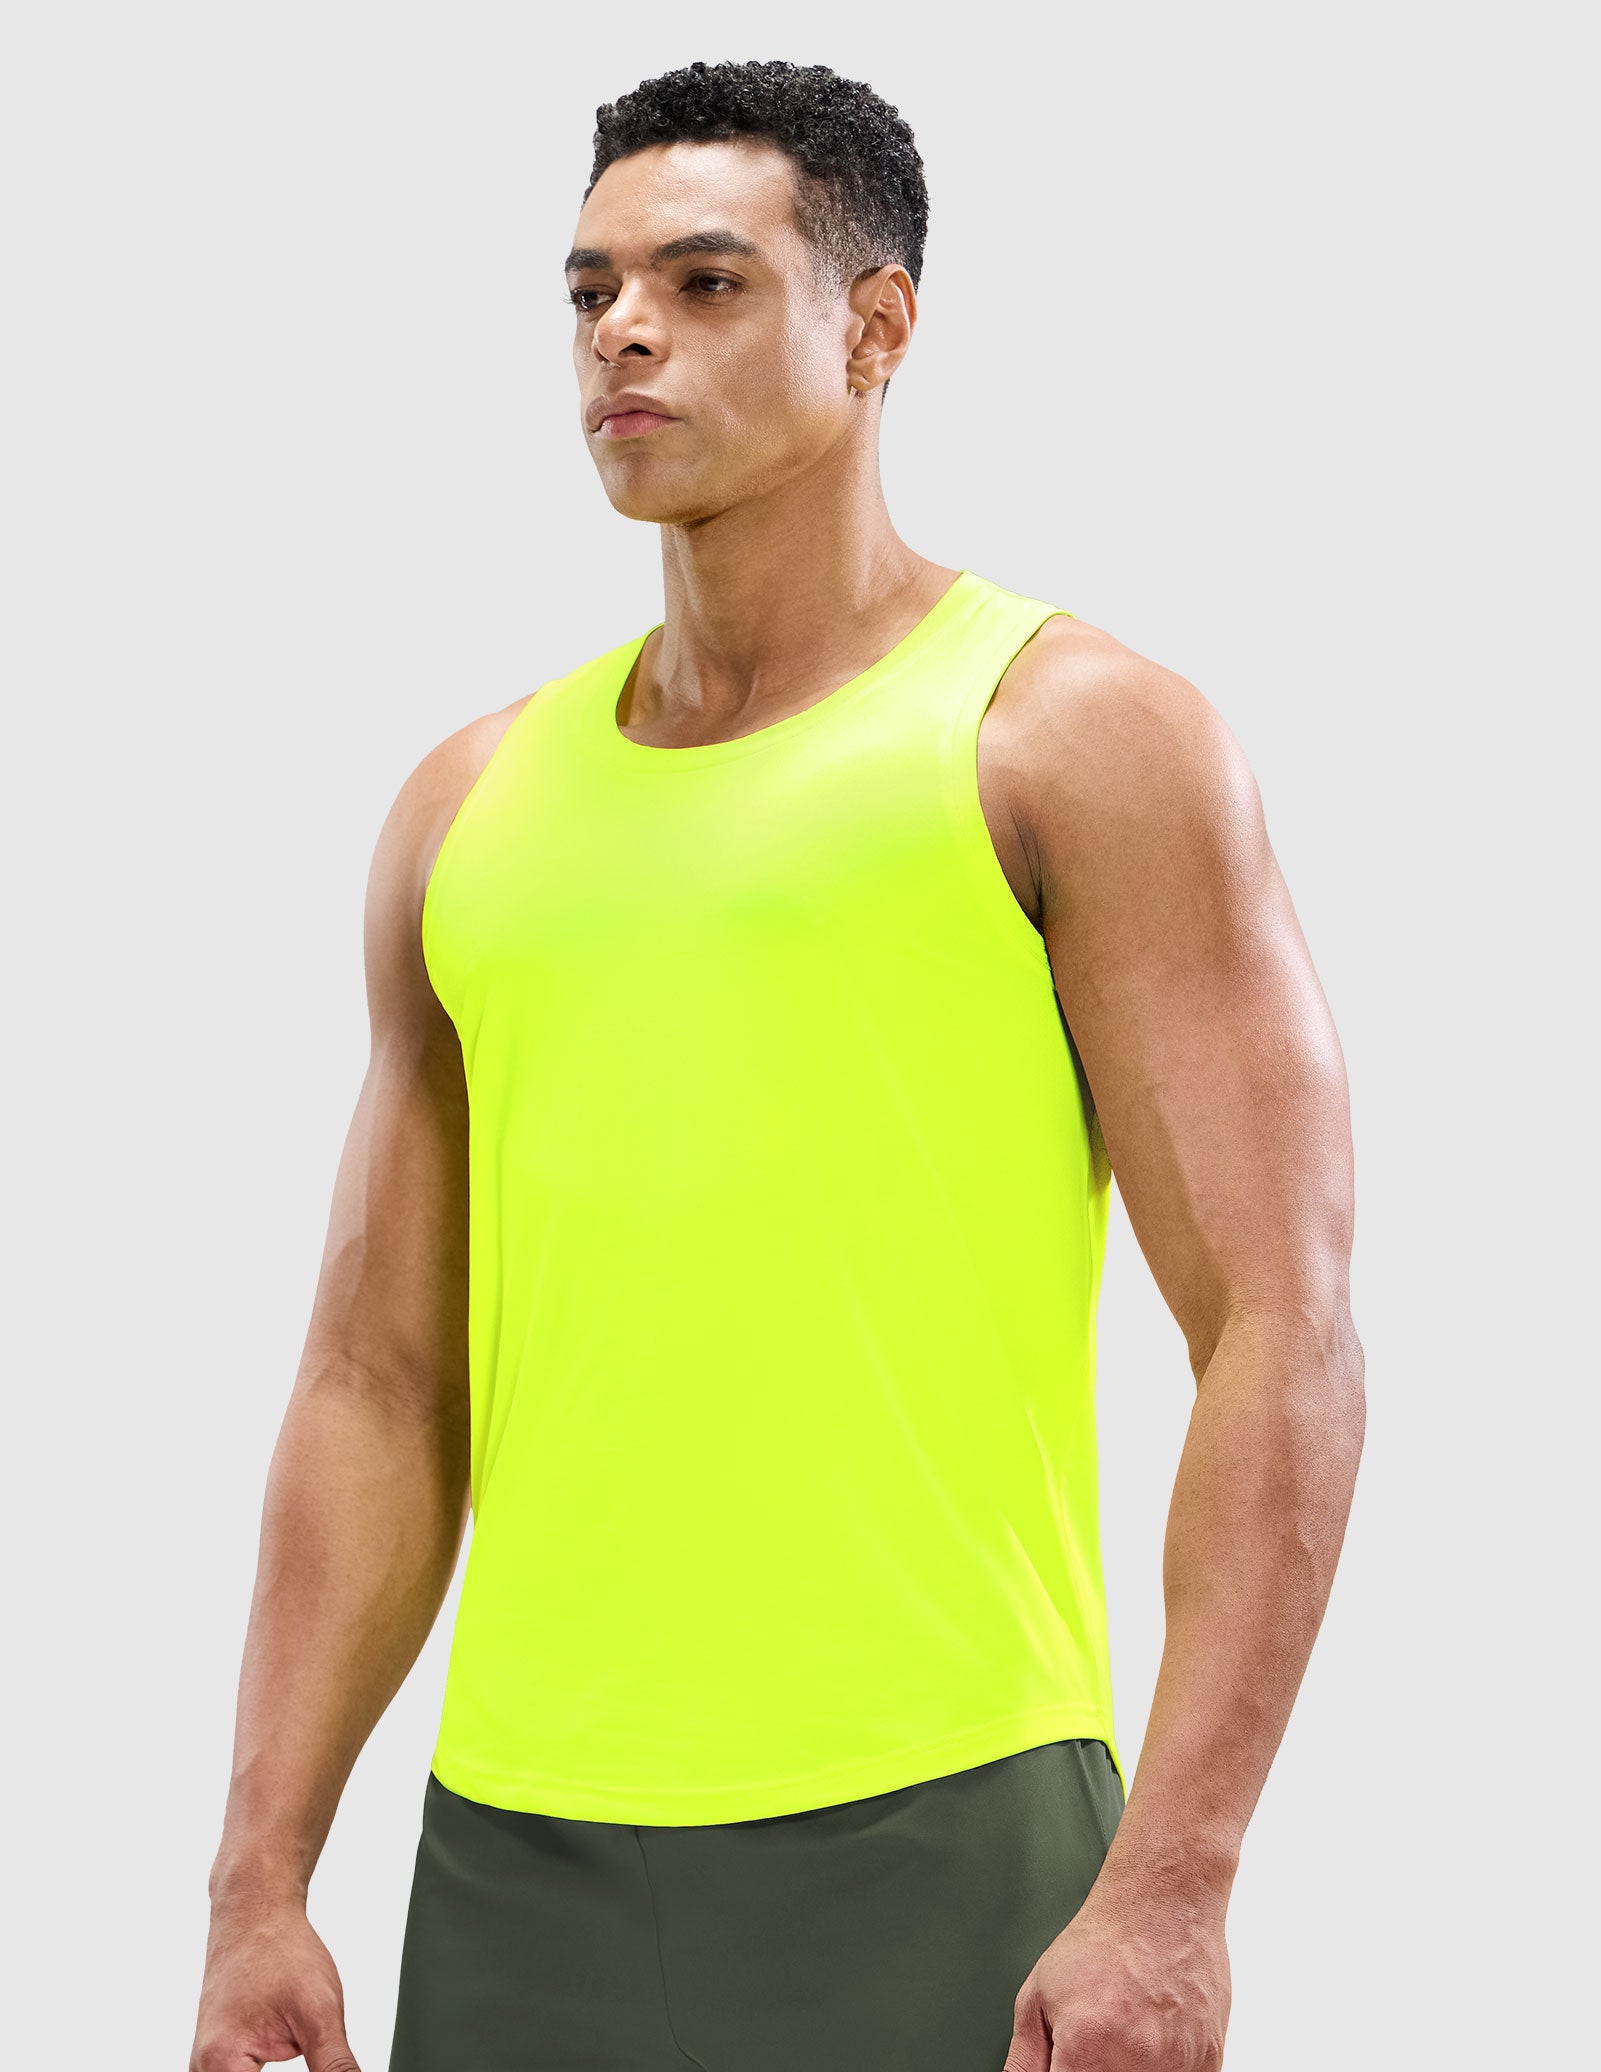 Men's Tank Tops Workout Sleeveless Tee Shirts